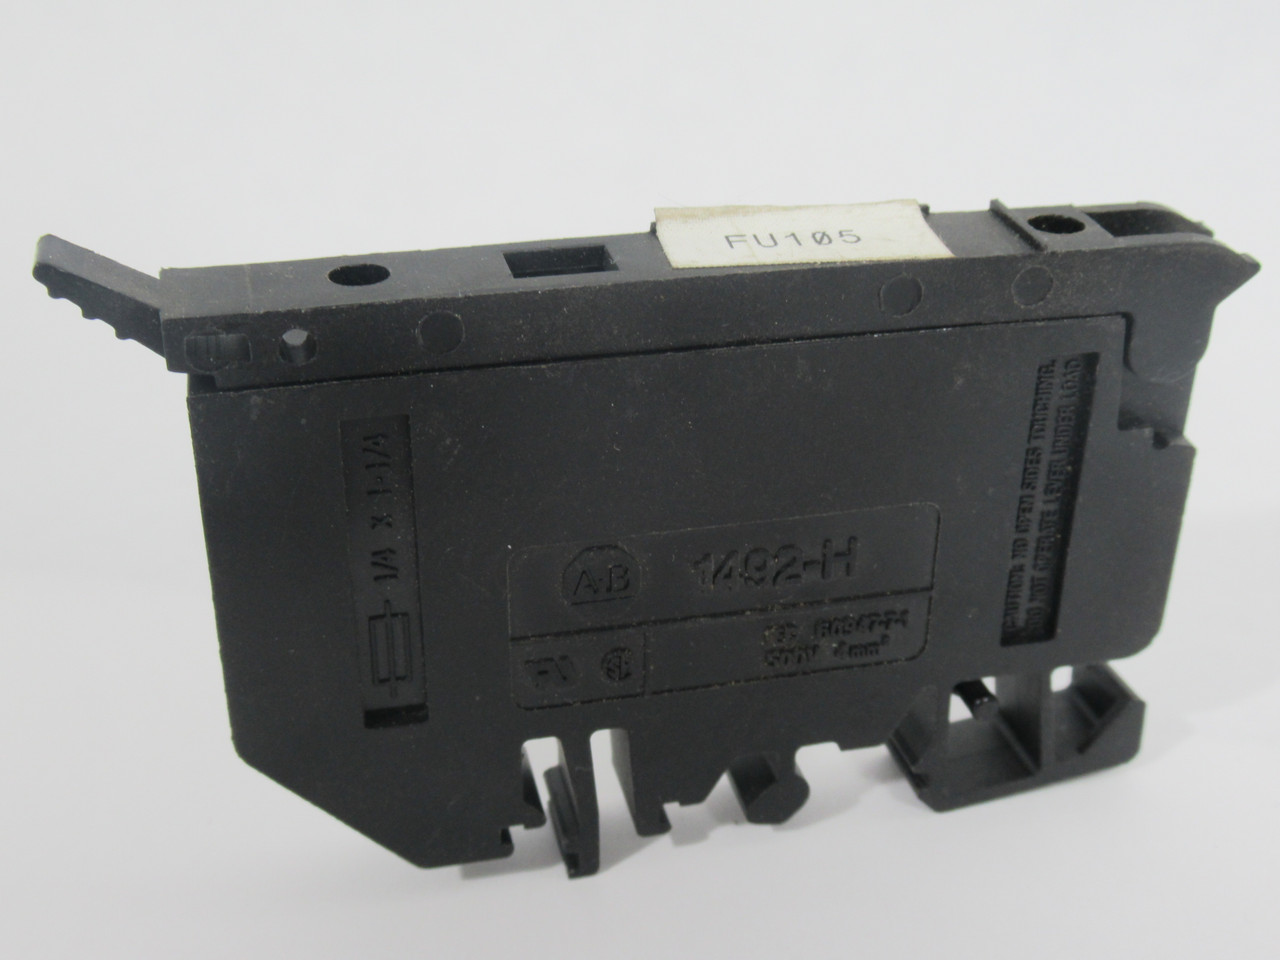 Allen-Bradley 1492-H4 Series C Fused Terminal Block w/Neon Indicator USED